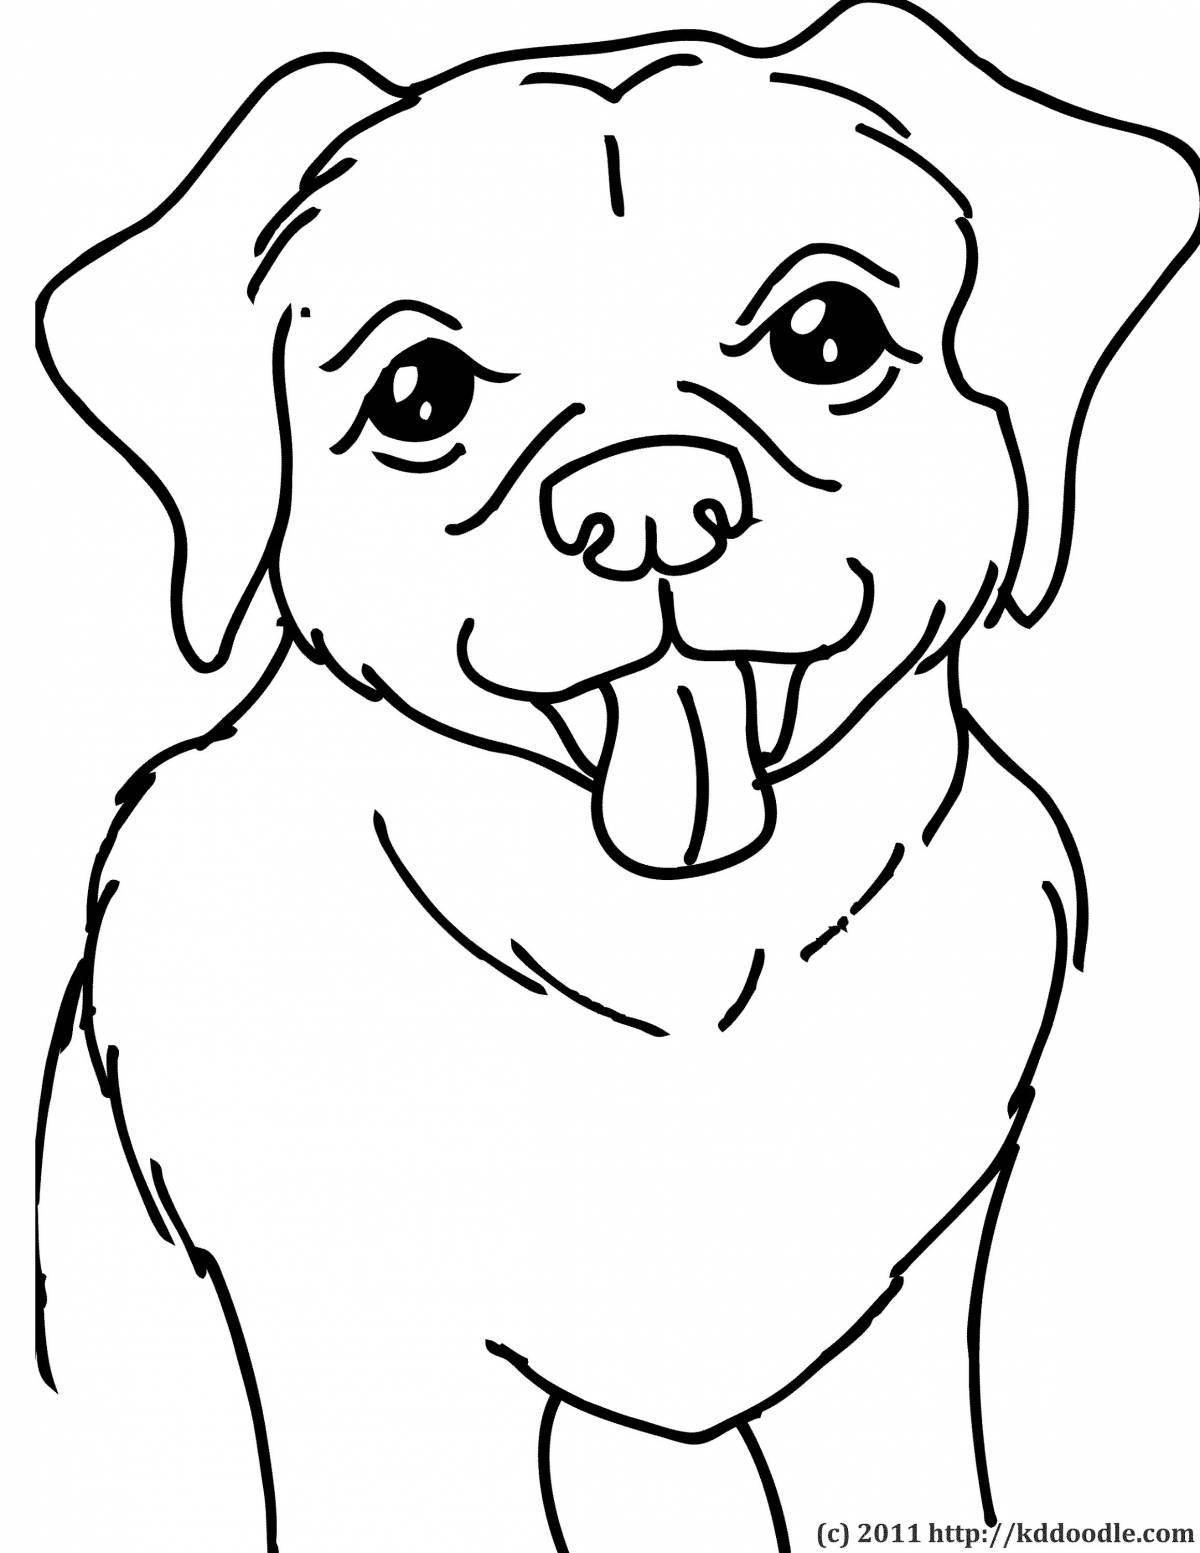 Coloring page inquisitive labrador puppy